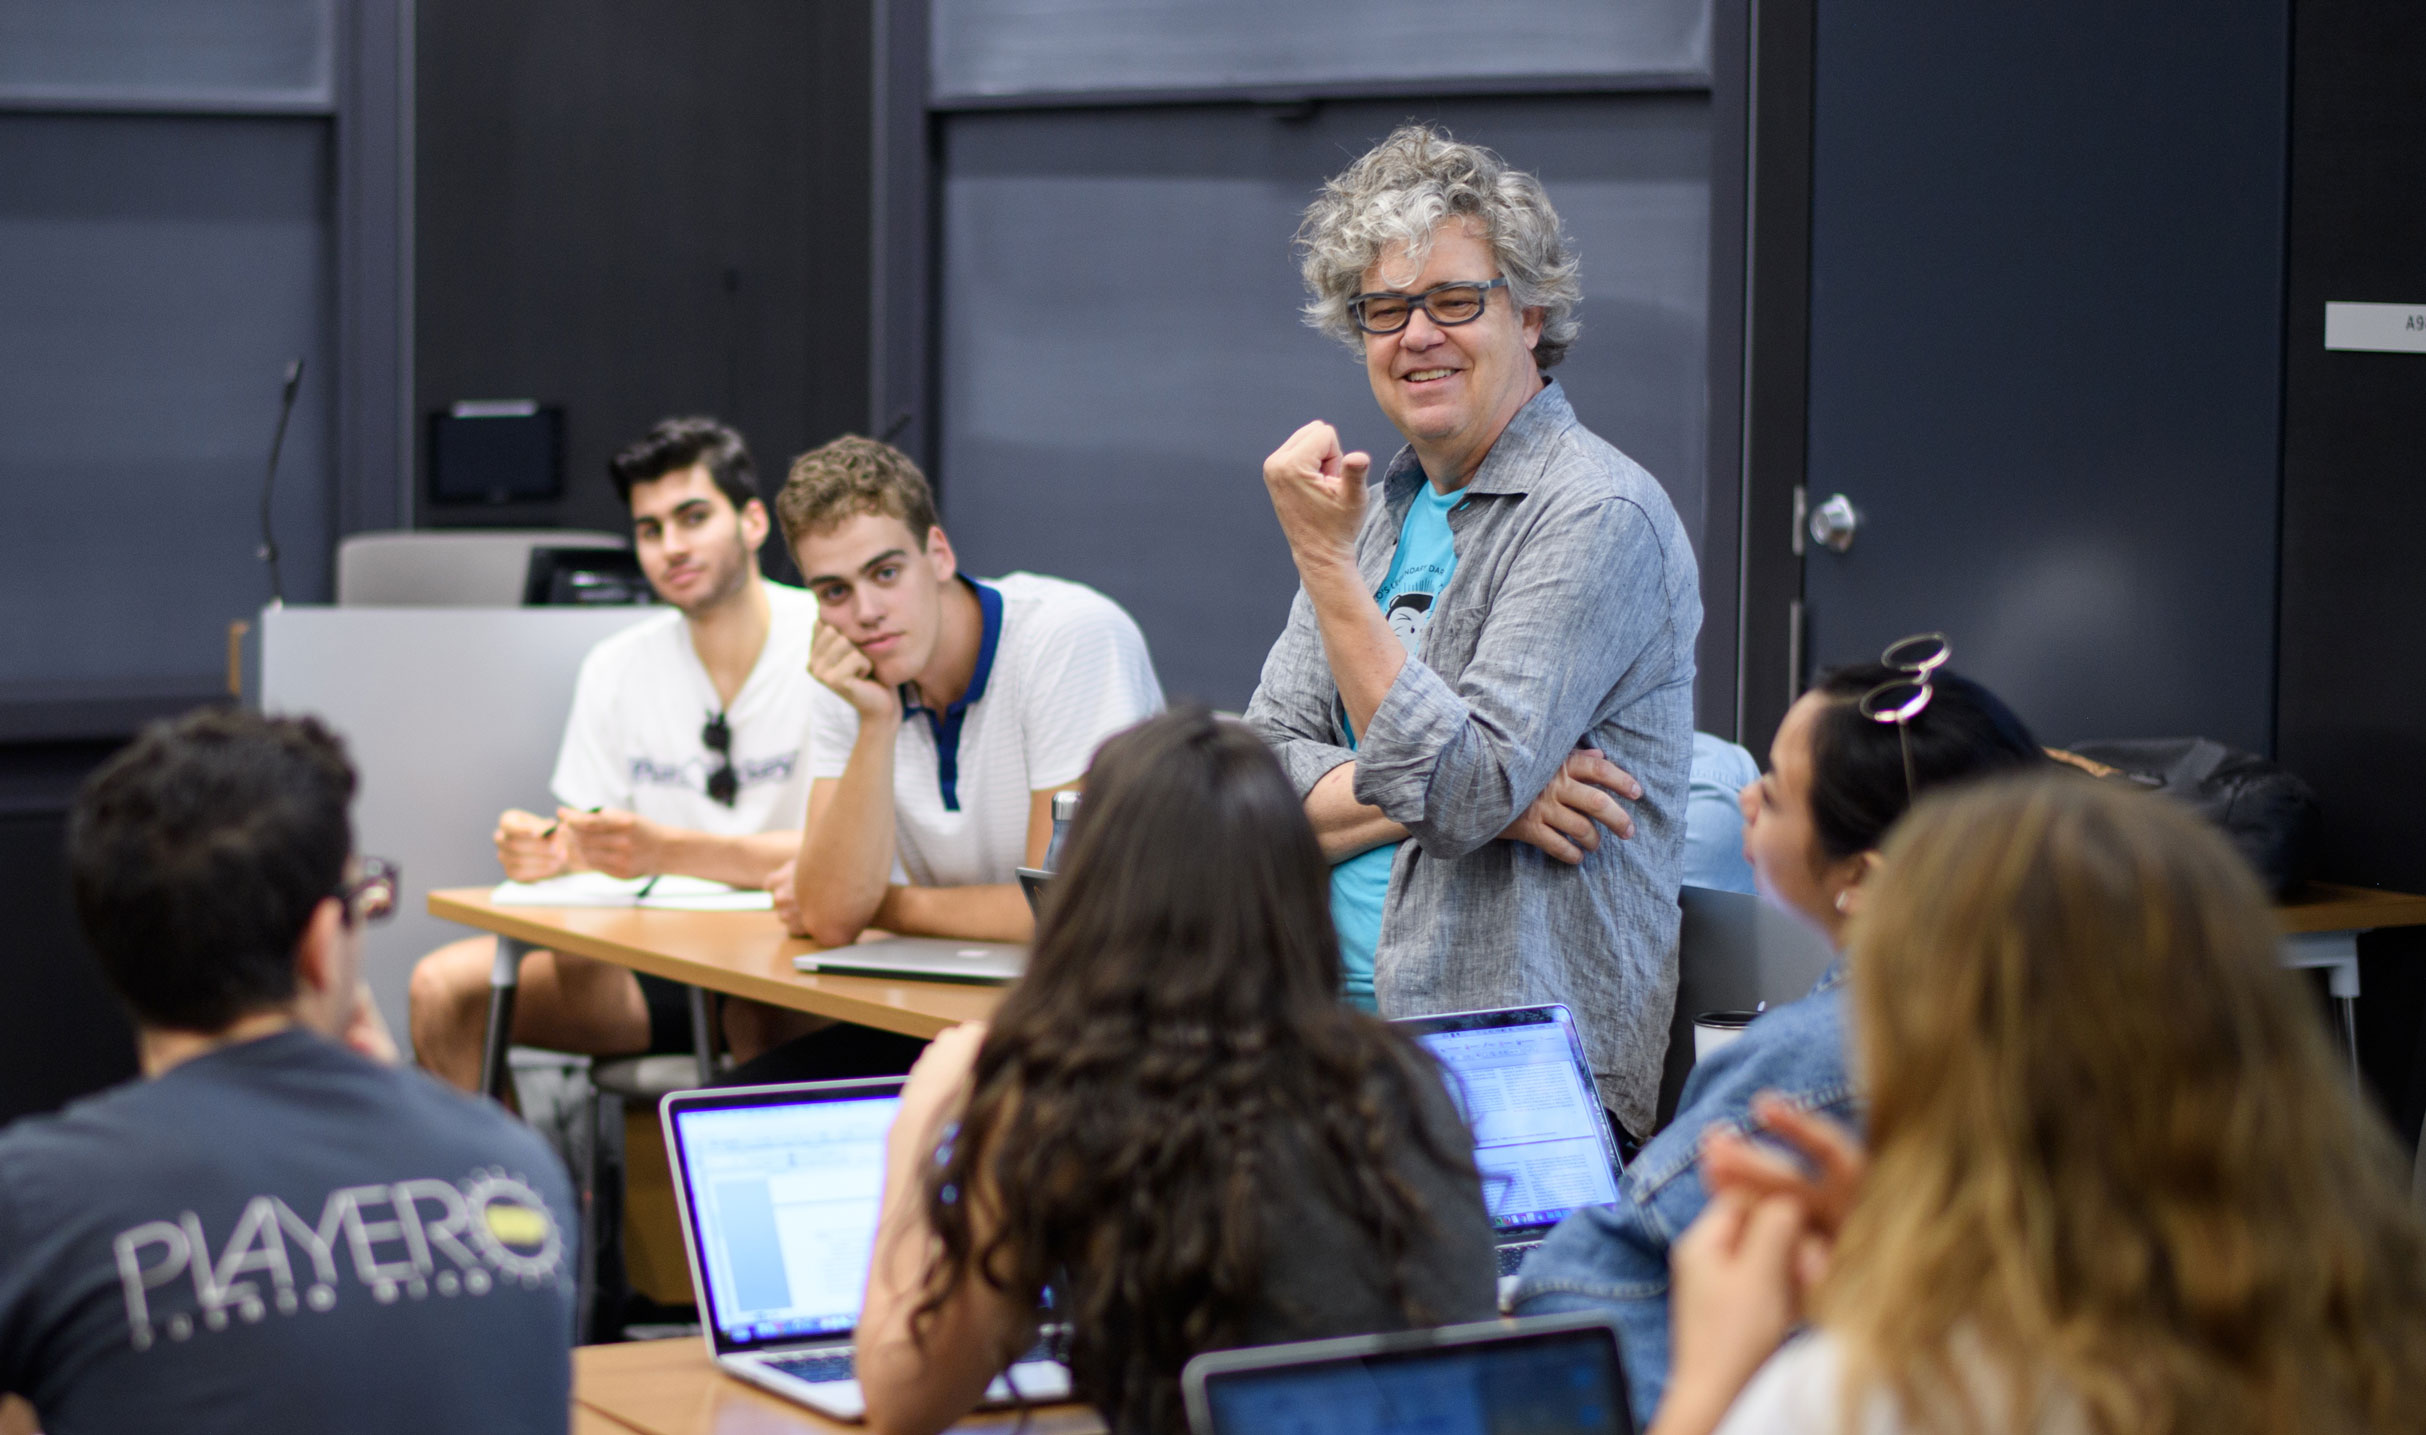 Professor leads Princeton class